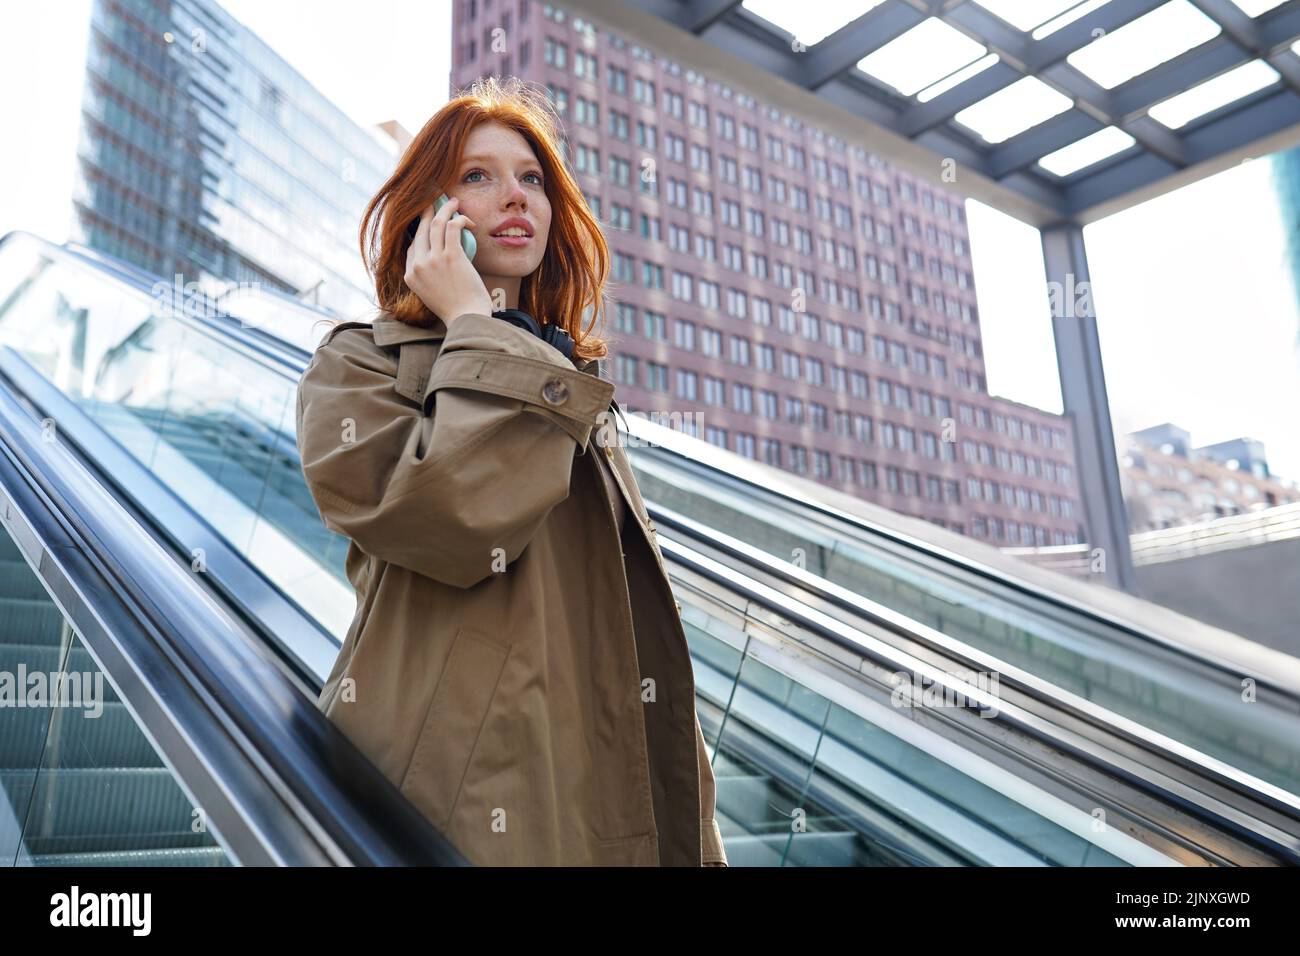 Teen redhead girl talking on cellphone standing on escalator. Stock Photo